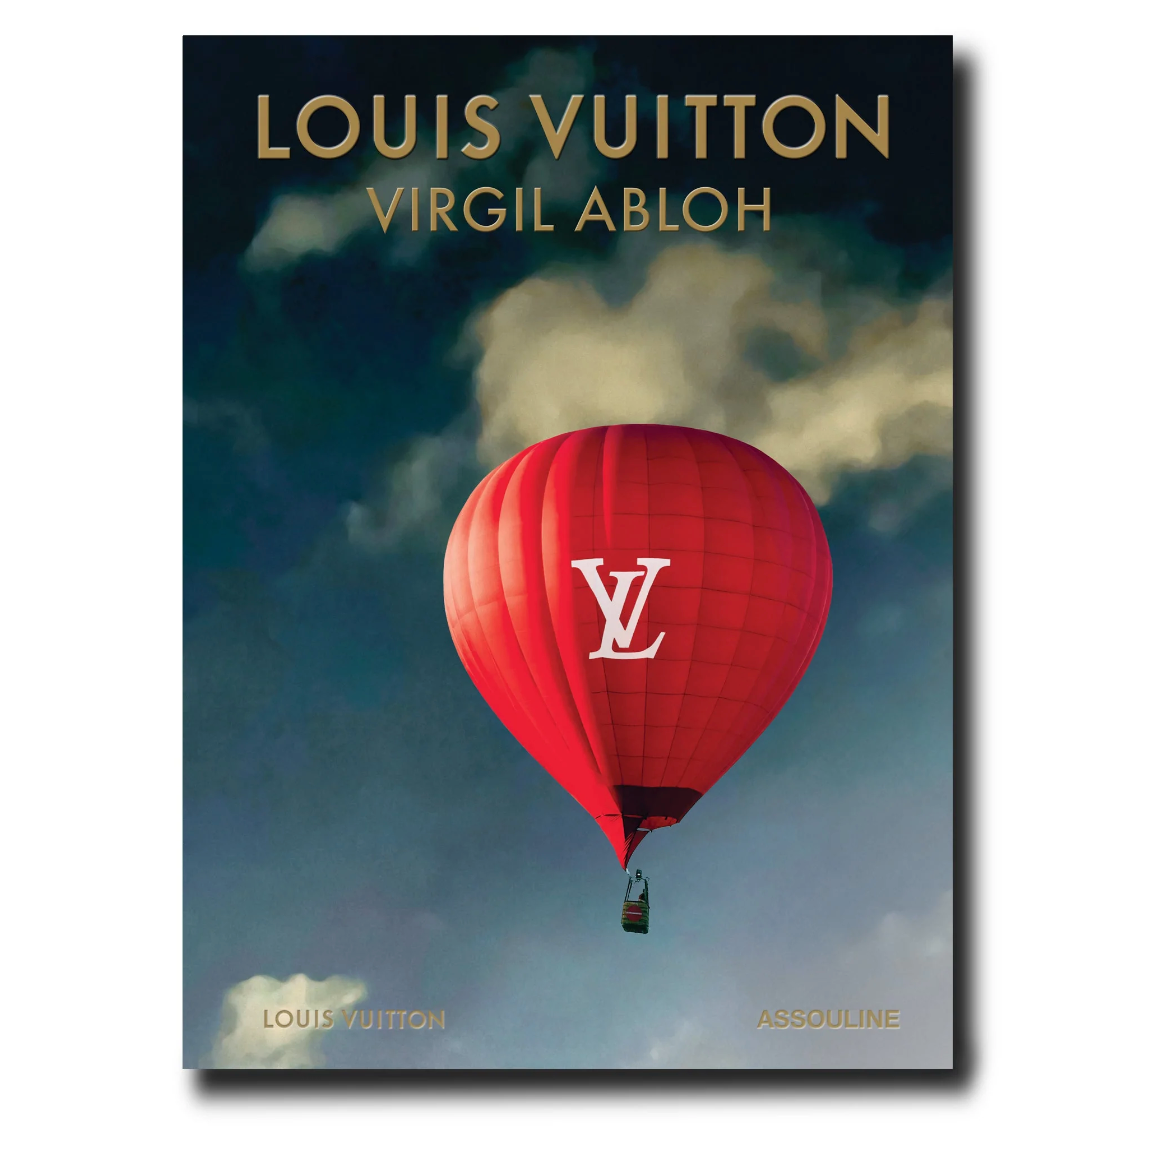 Louis Vuitton: Virgil Abloh Book Classic Cartoon Cover Assouline